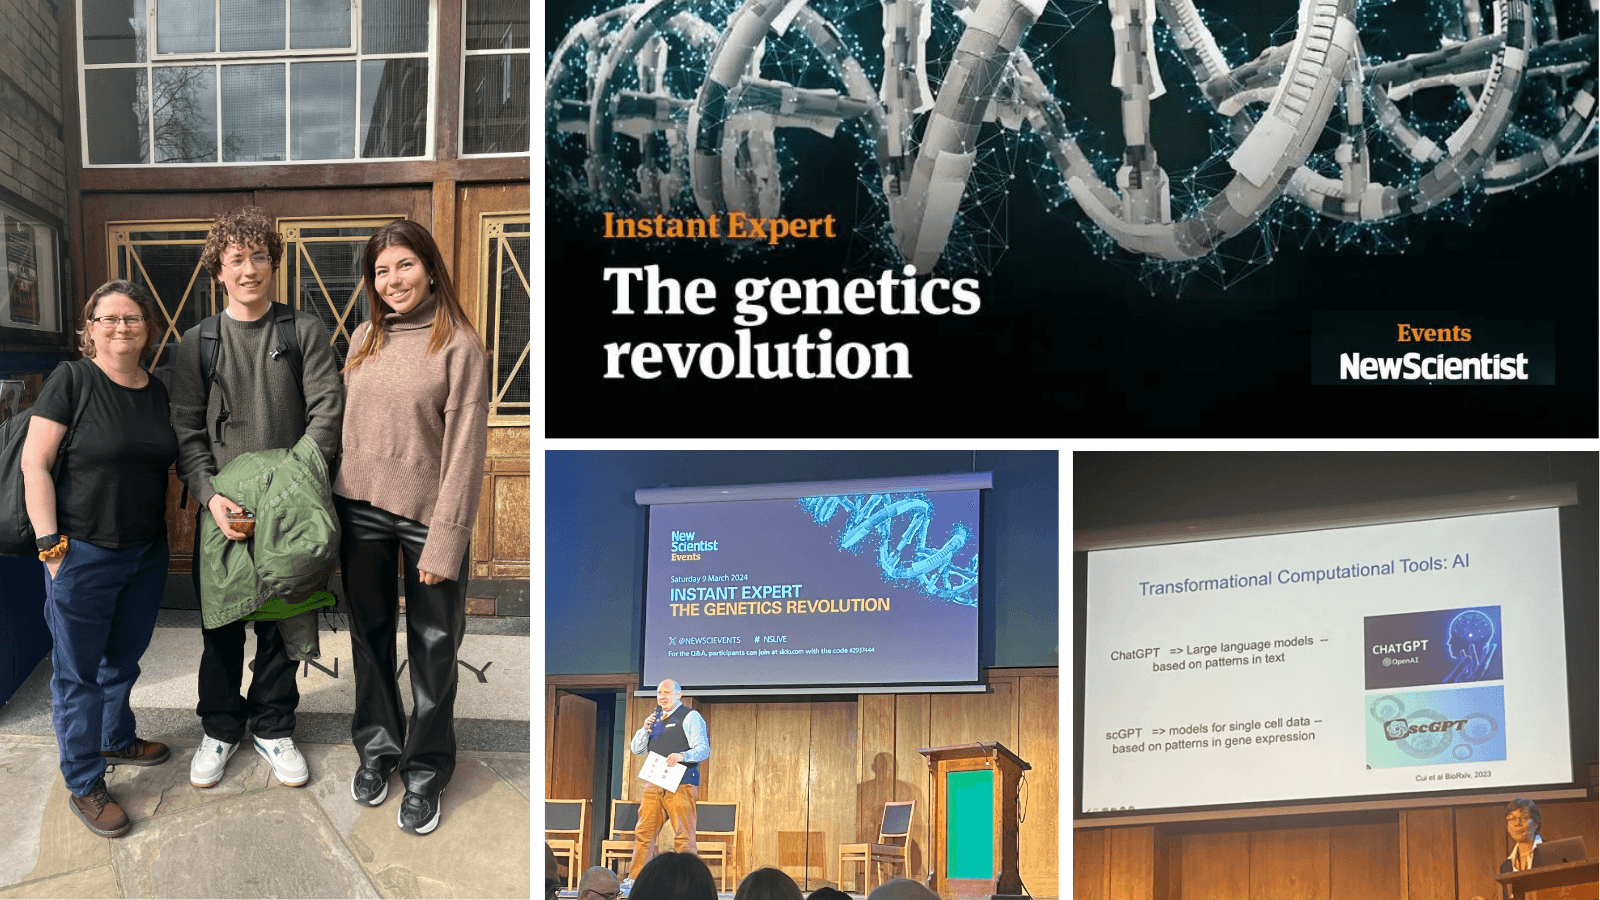 New Scientist 'The Genetics Revolution' event